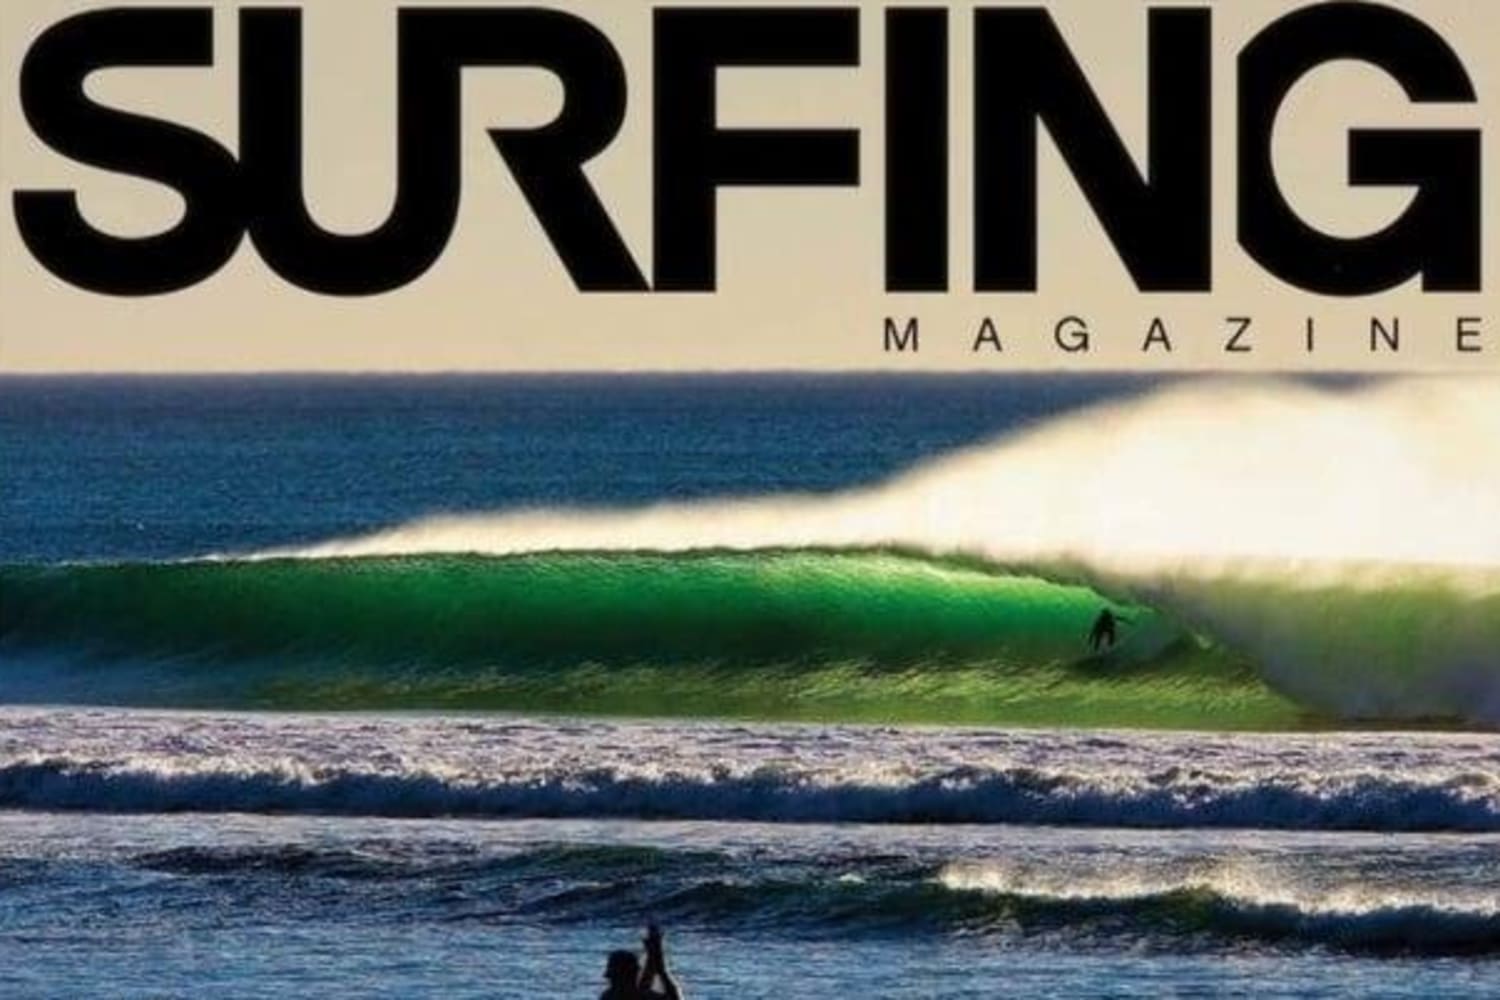 Surfing Magazine Mejores Portadas